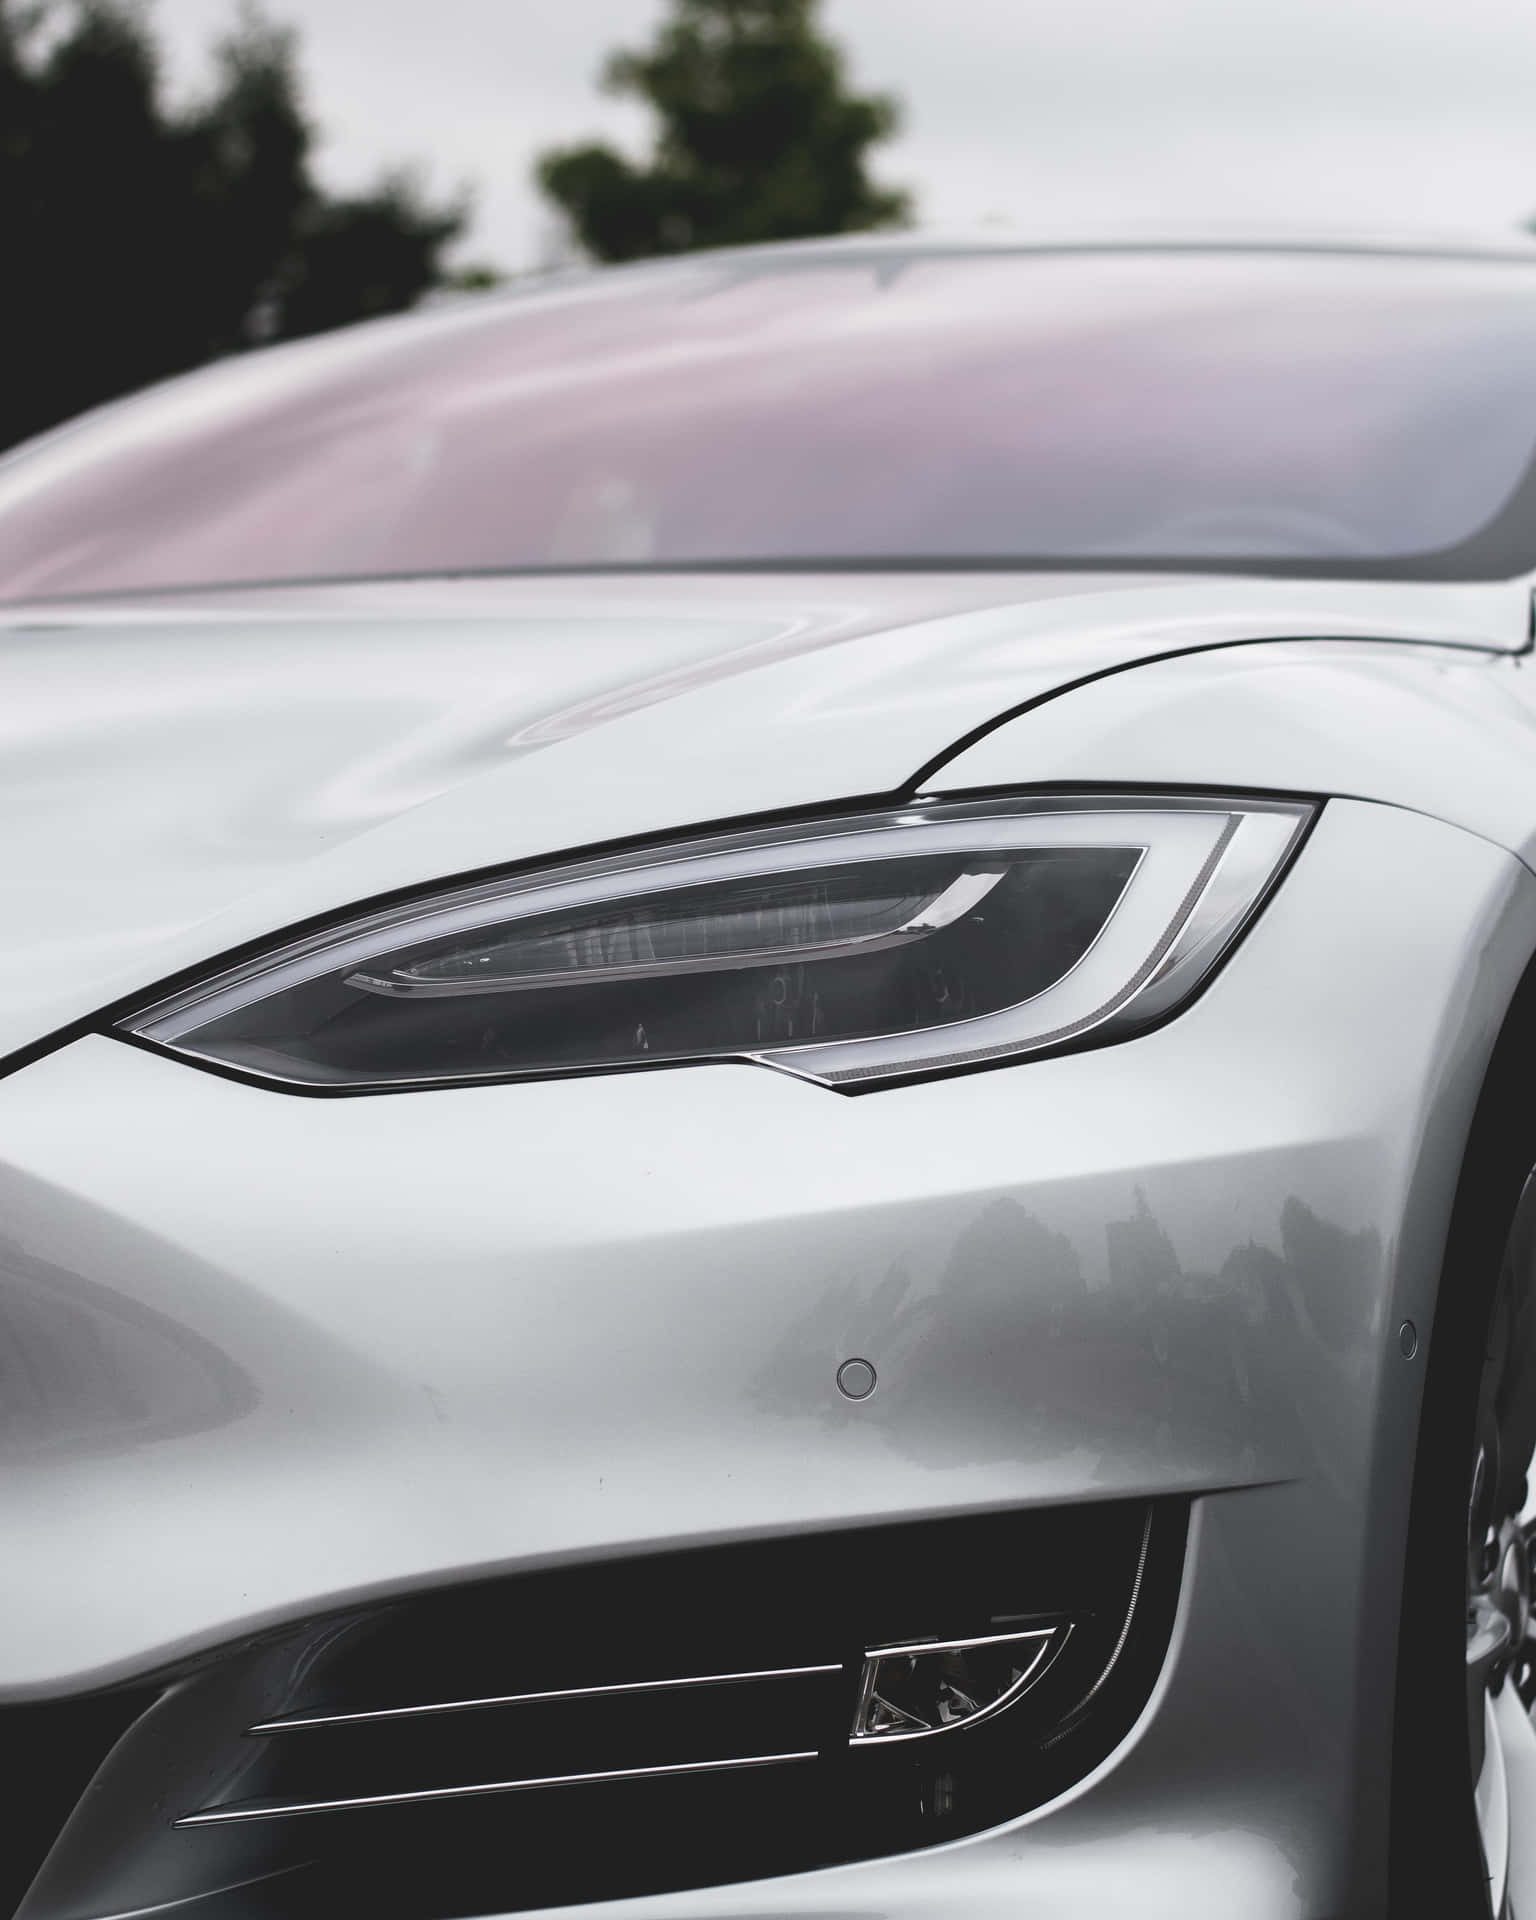 Exclusive Tesla Roadster - A Glimpse Into Future Automobile Innovation